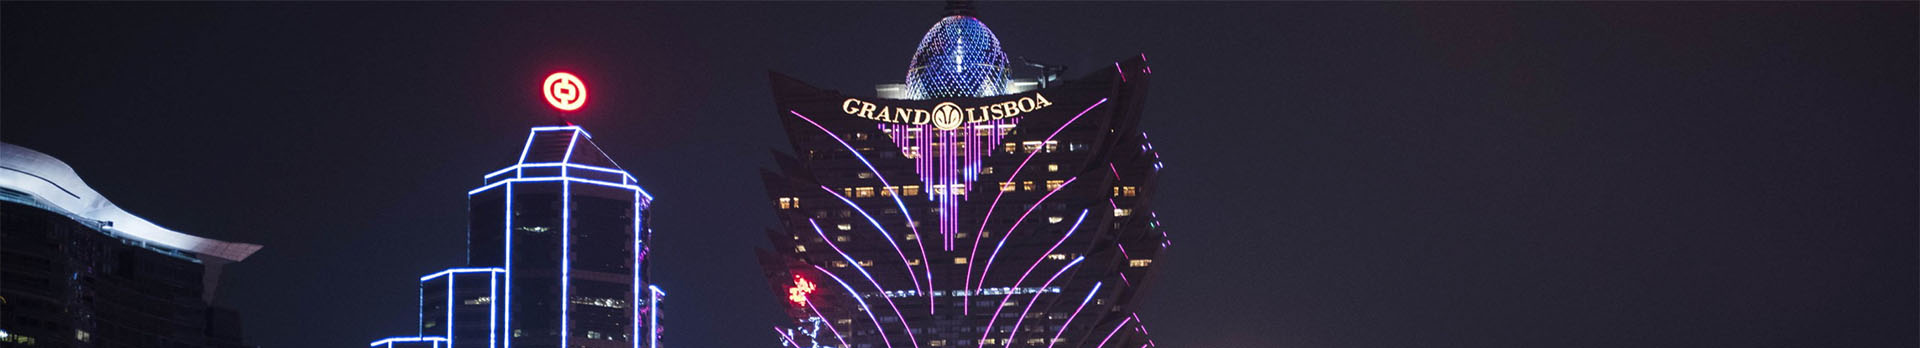 Grand Lisboa Casino